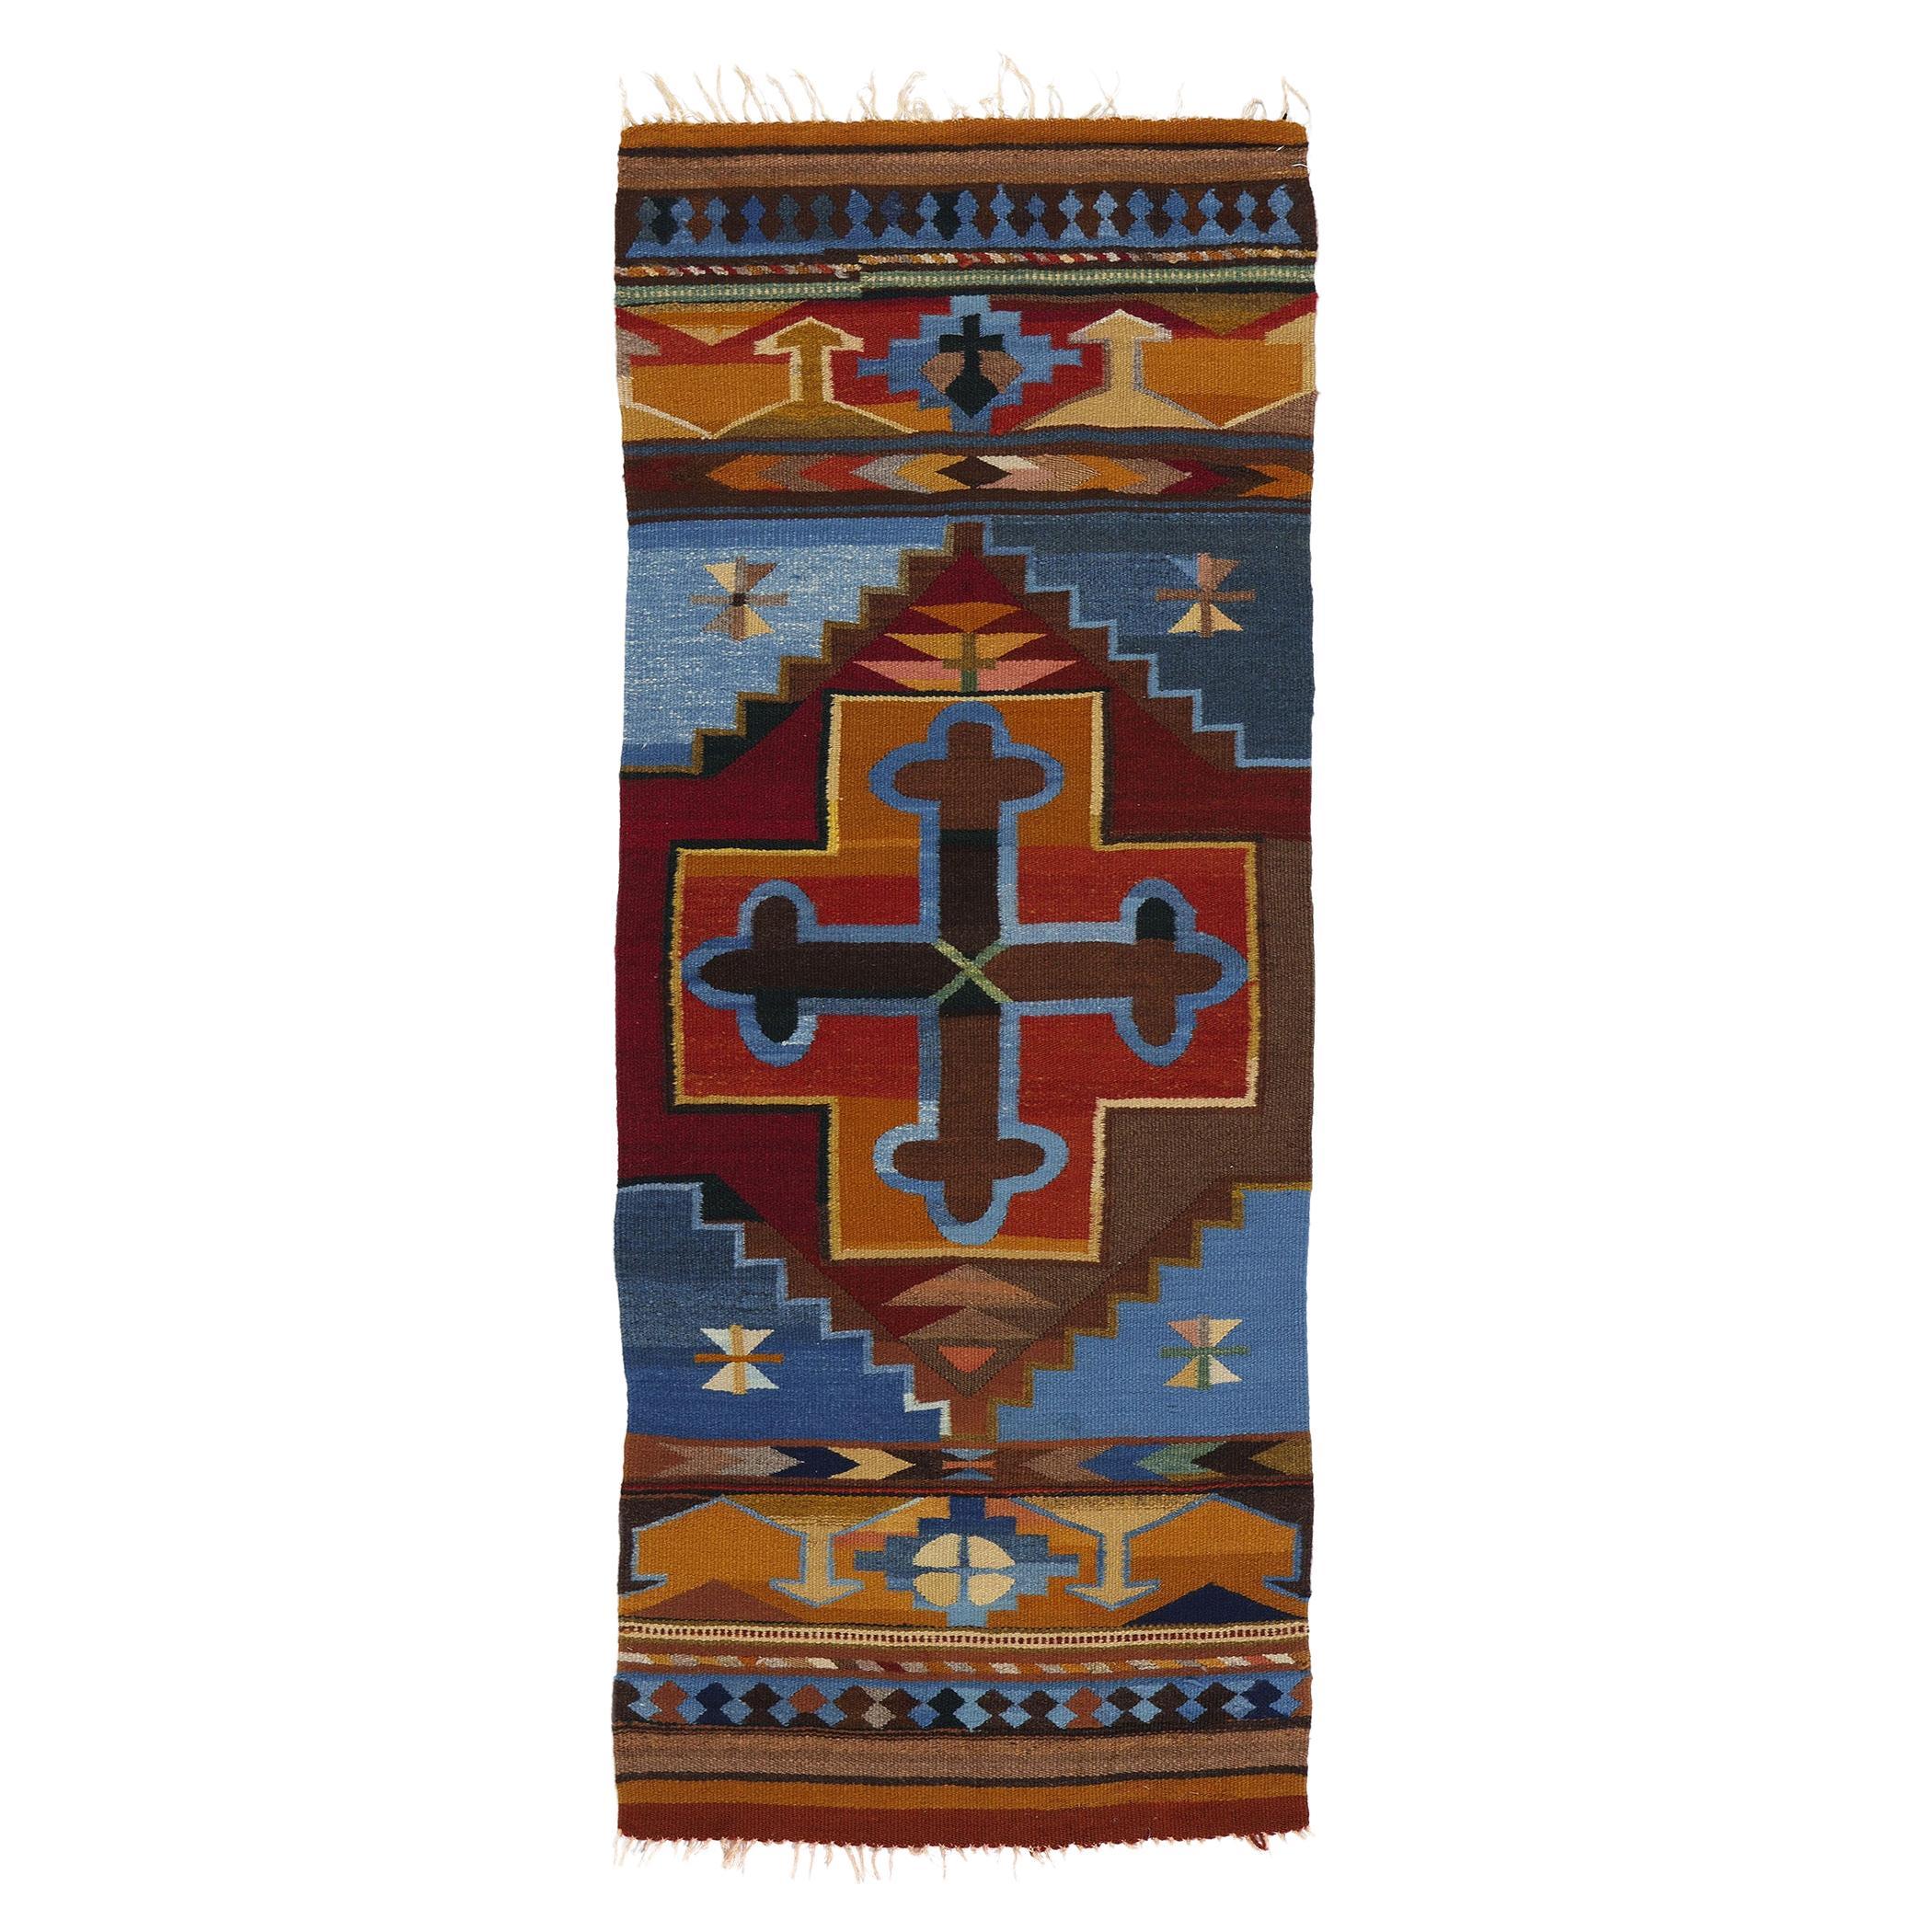  Vintage Turkish Kilim Rug, Colorful Bohemian Meets Tailor-Made Elegance For Sale